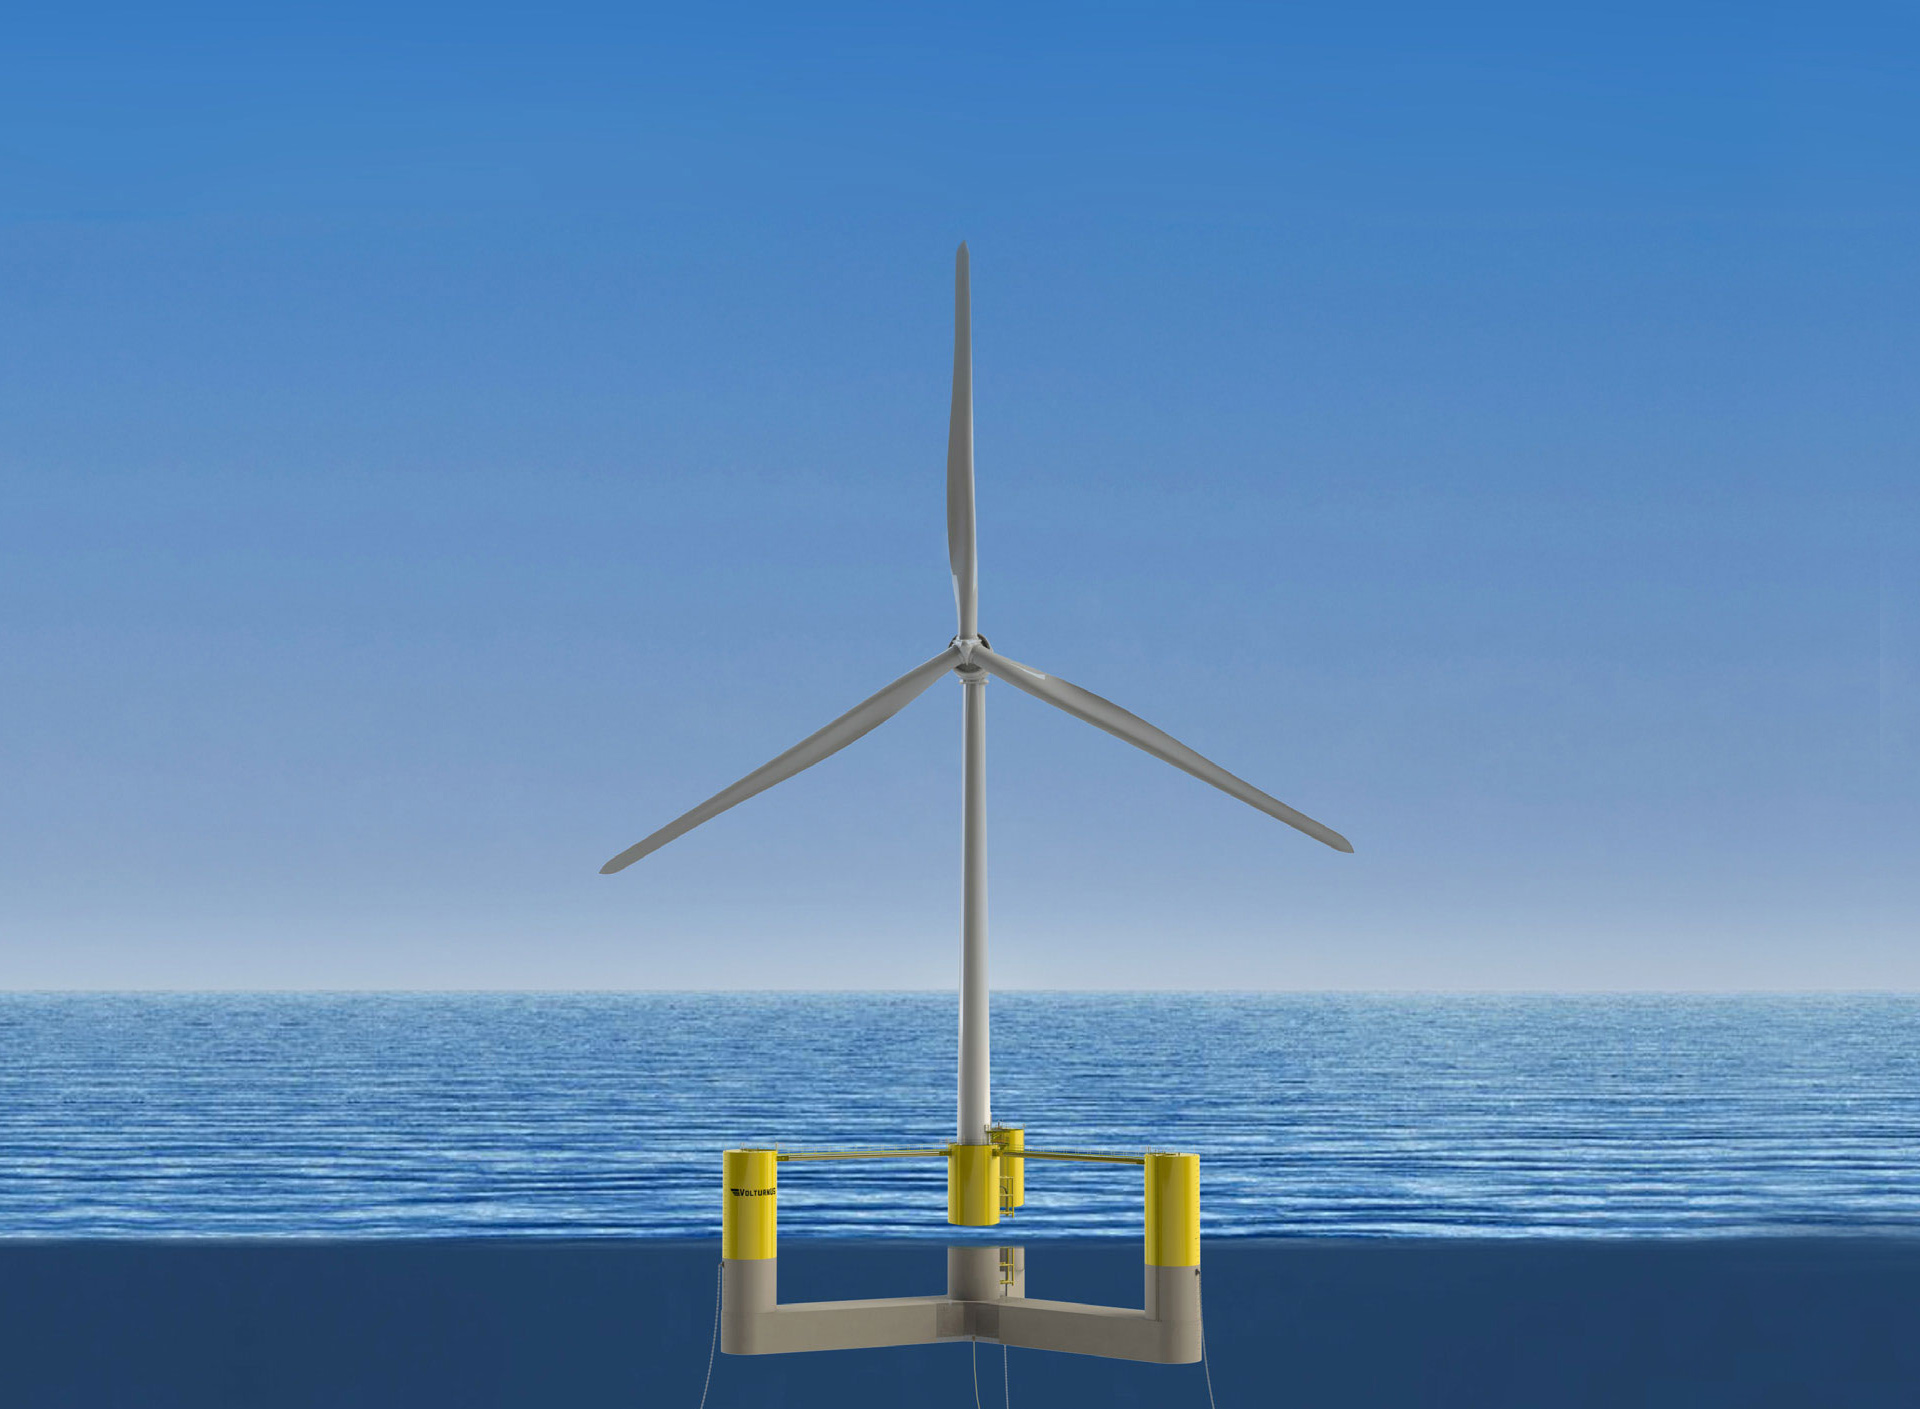 Conceptual rendering of floating wind turbine